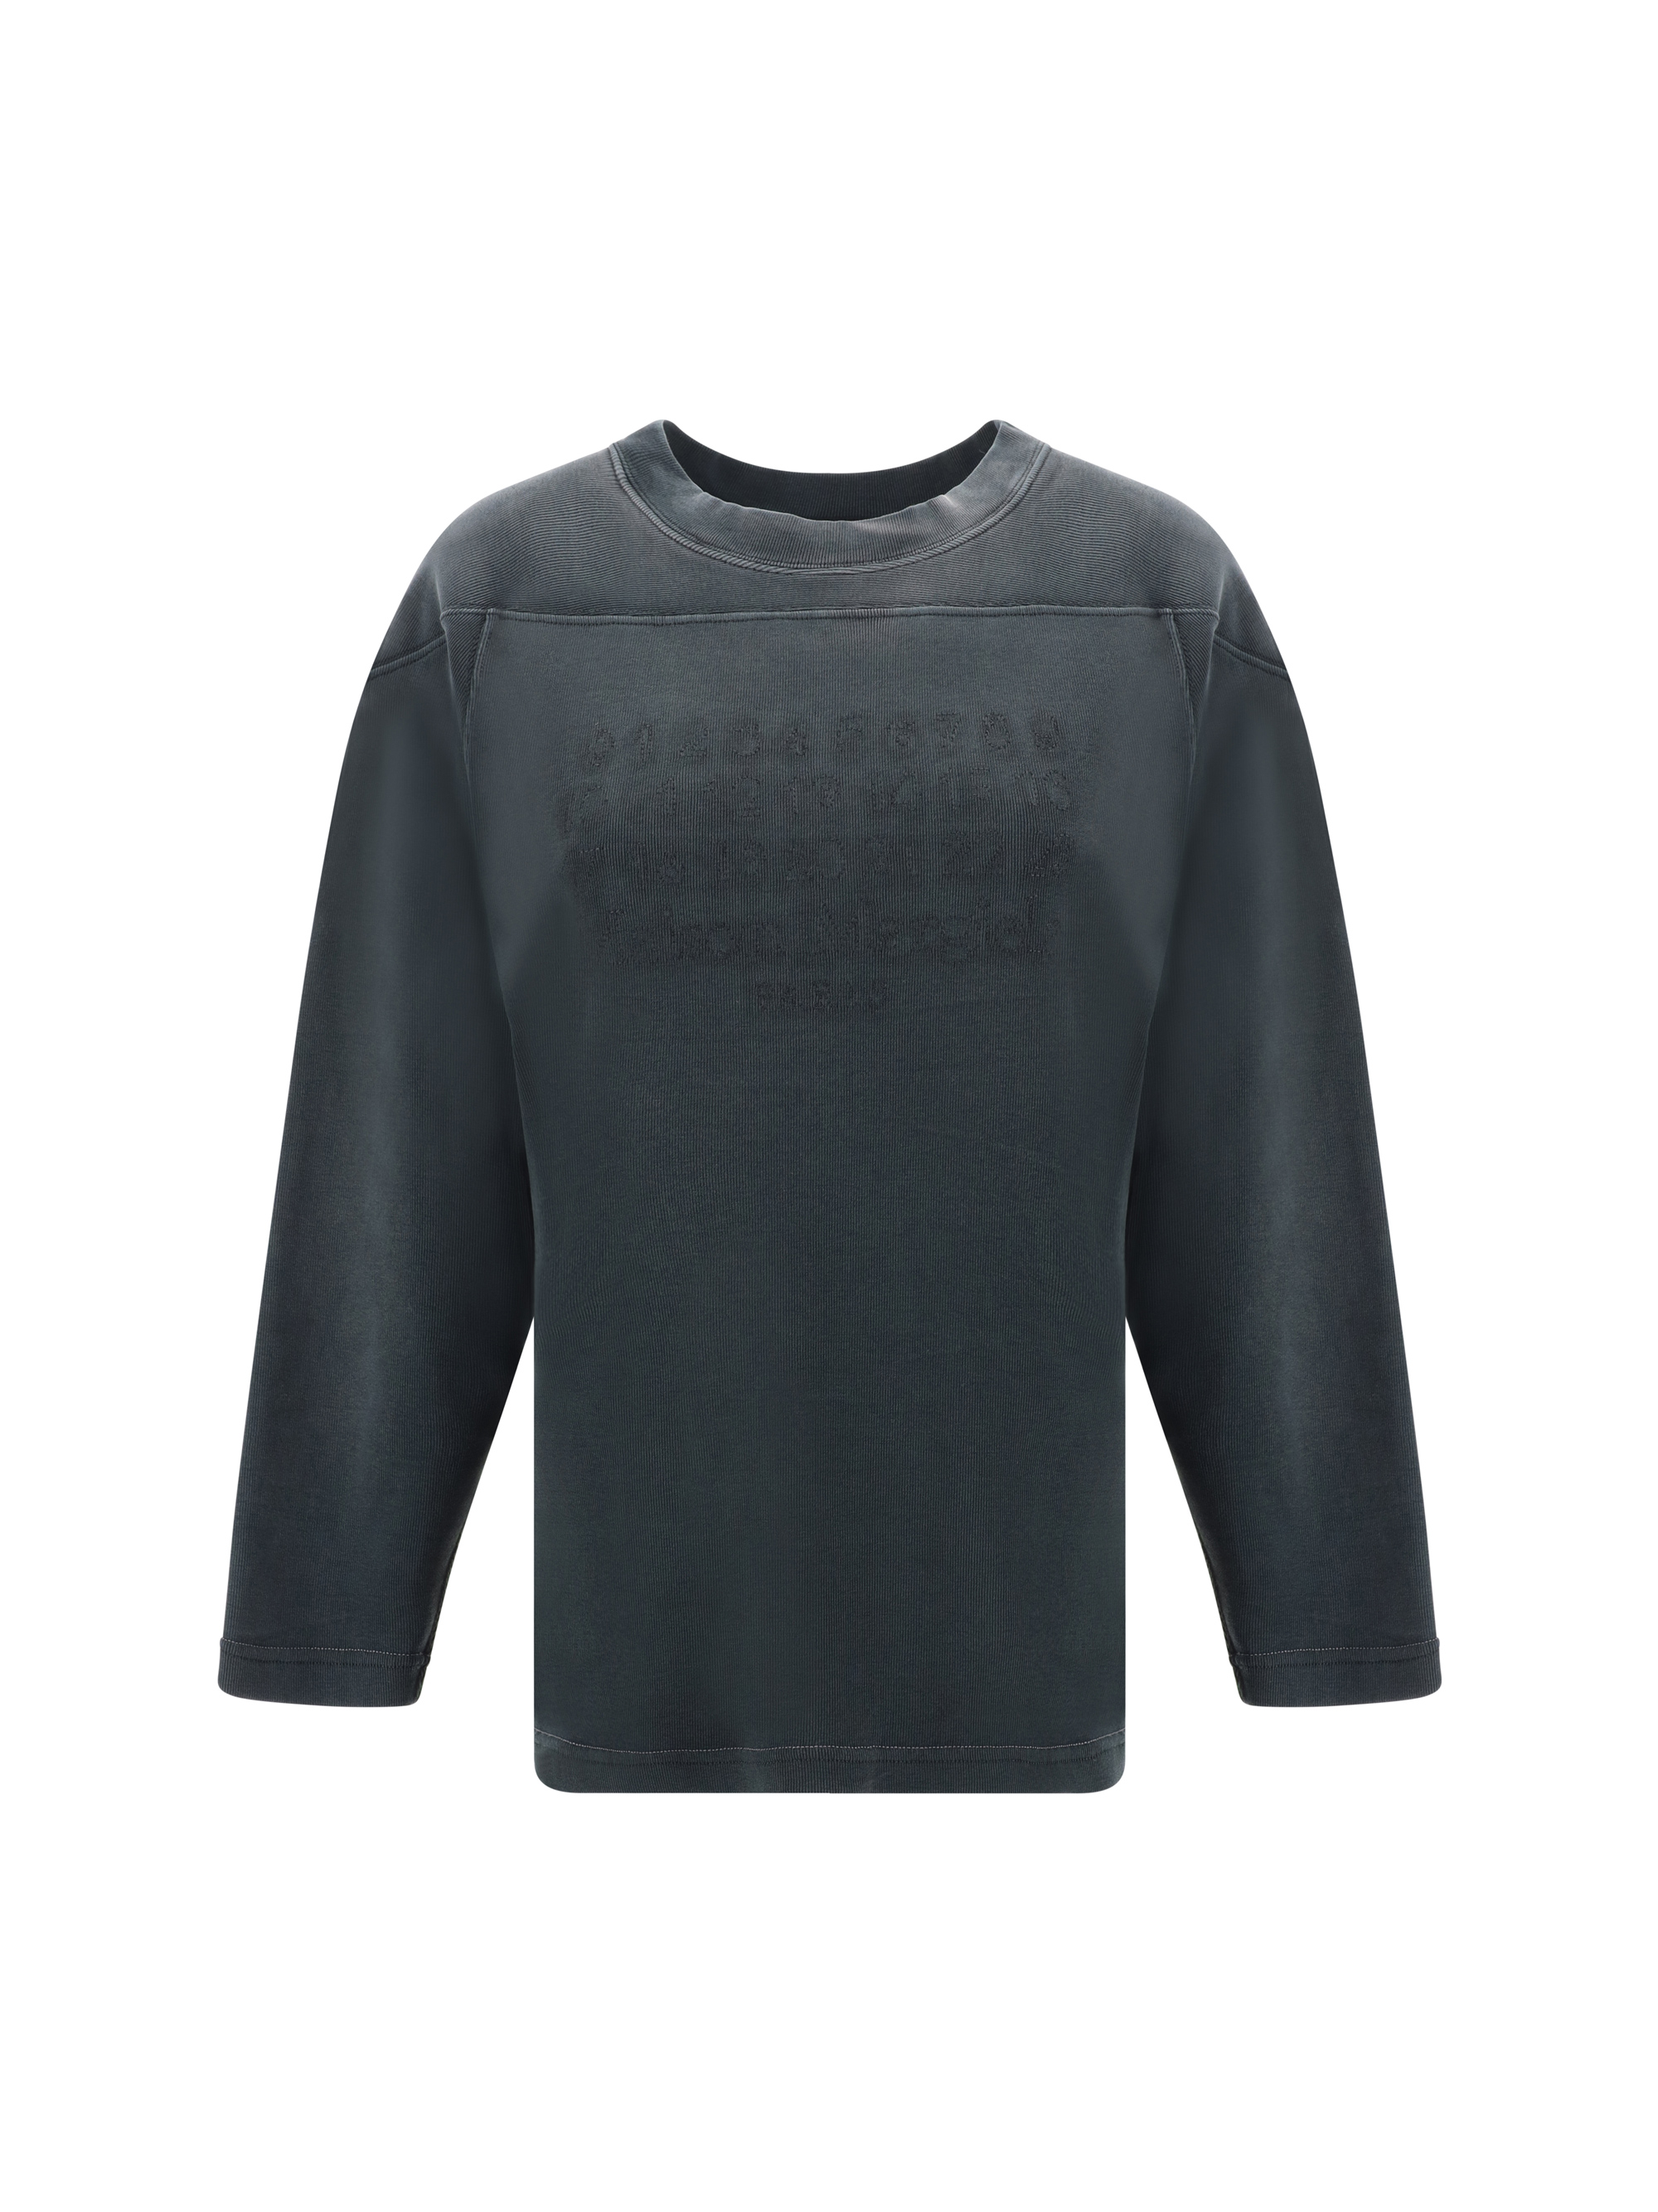 Margiela Sweatshirt In Black